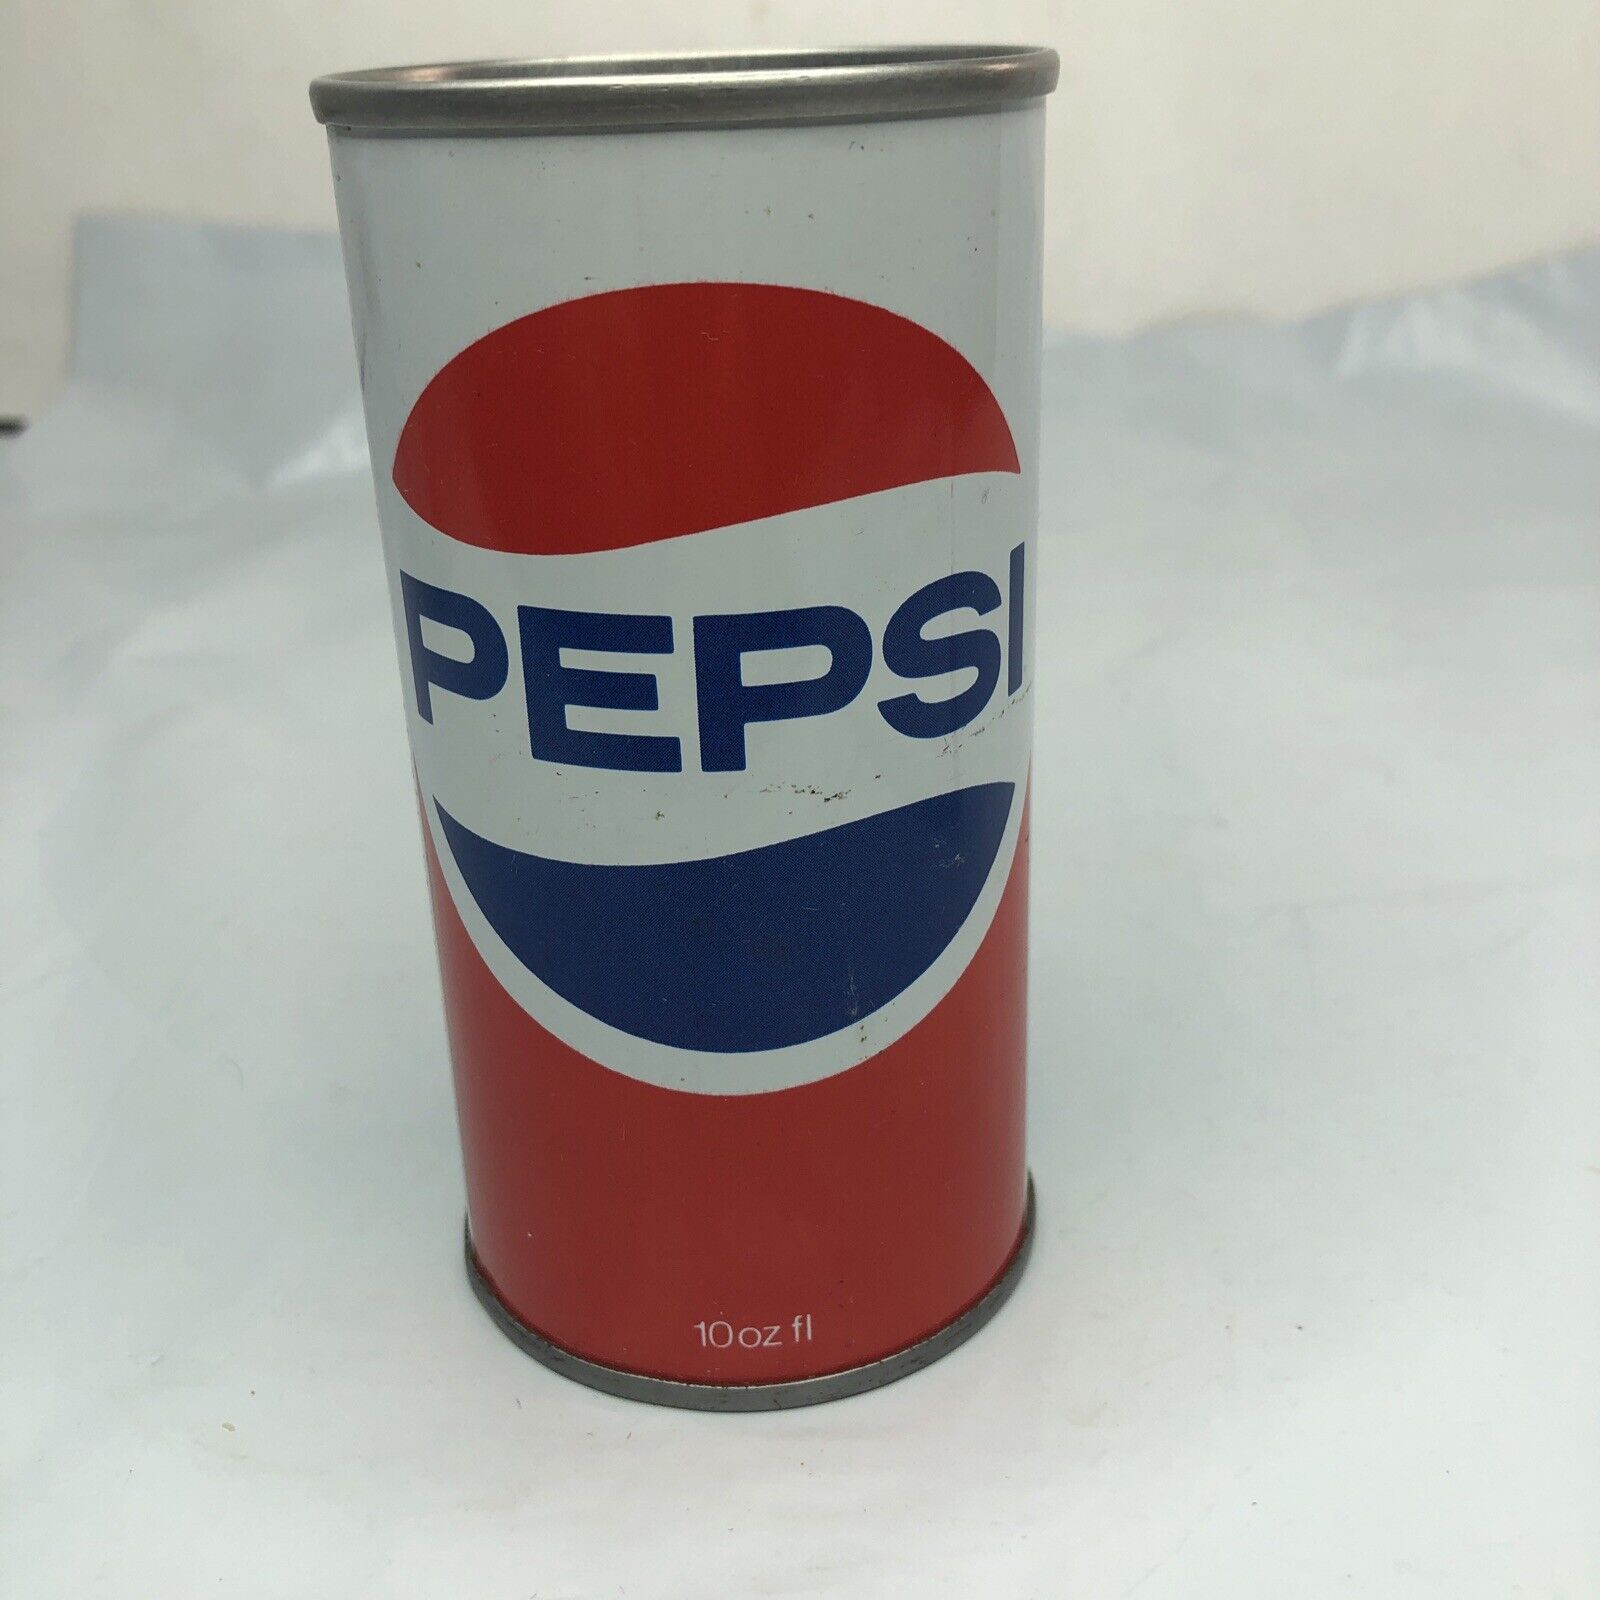 Vintage Rare Pepsi 10oz fl Push Tab Candian Soda Can 1977